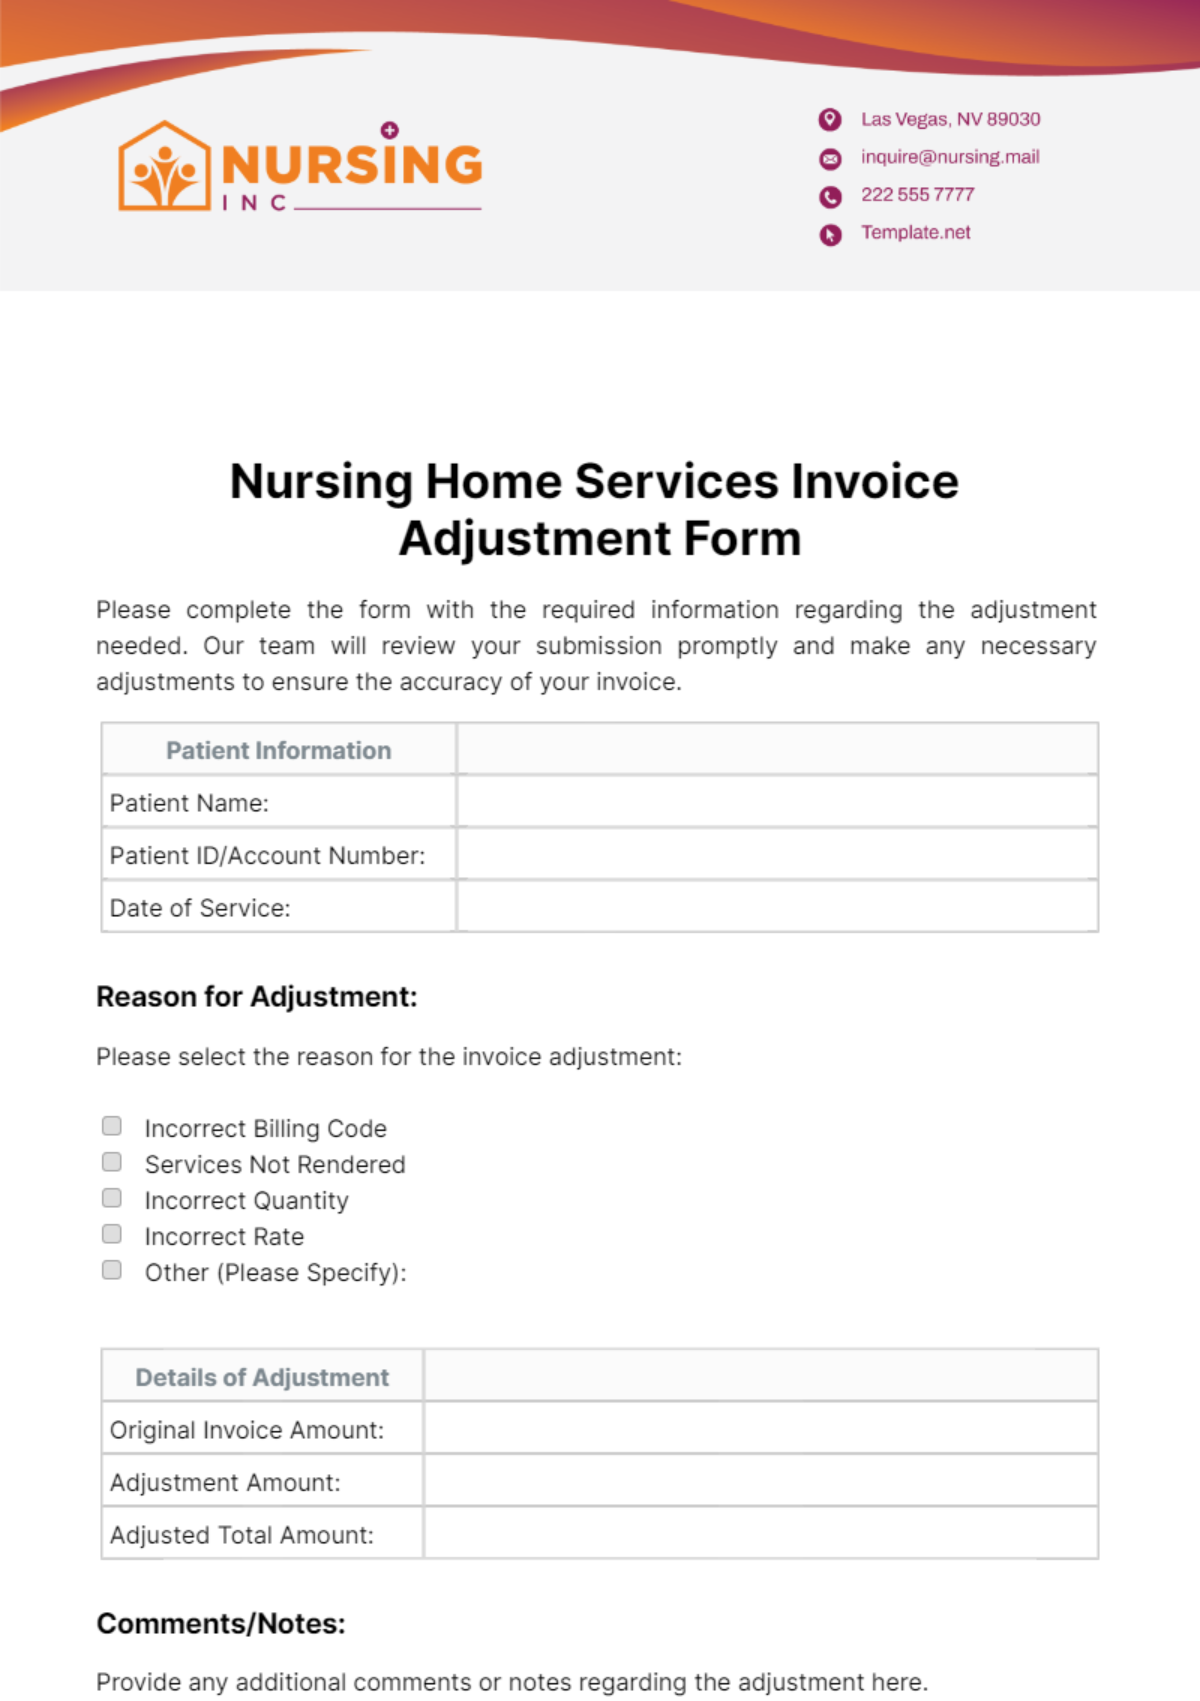 Free Nursing Home Services Invoice Adjustment Form Template